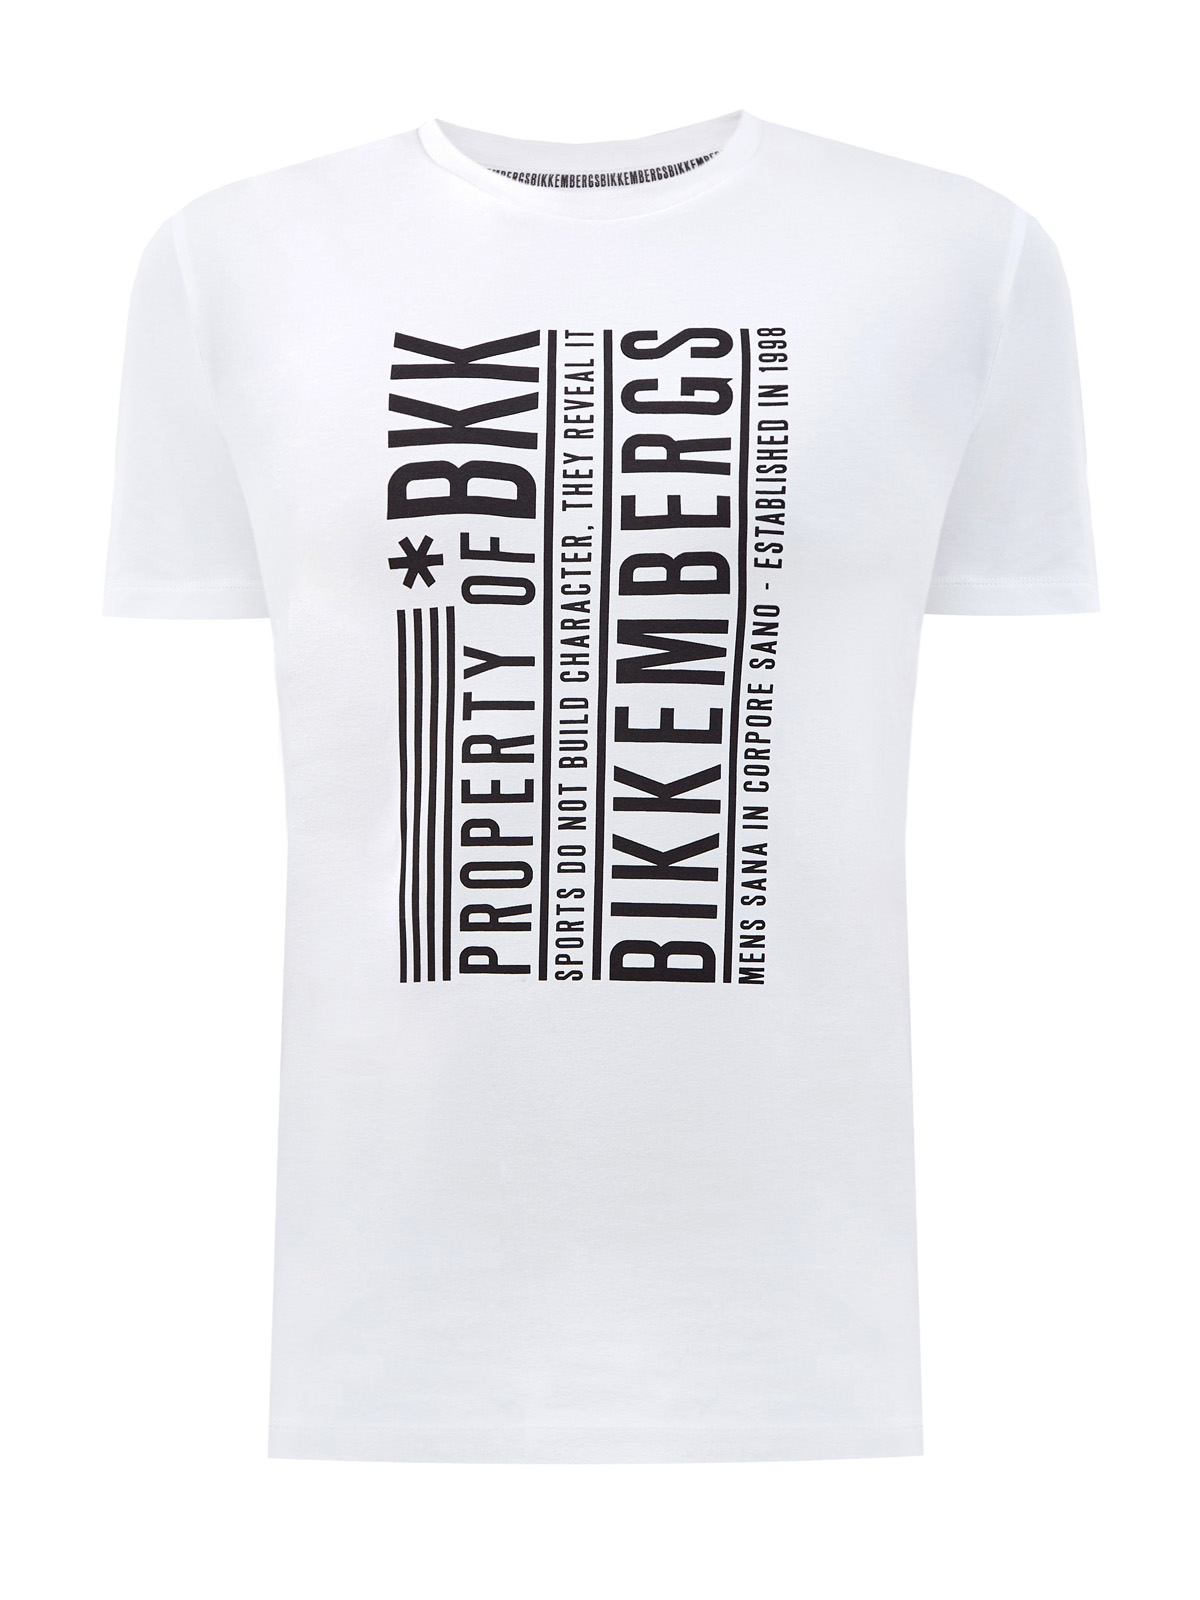 Хлопковая футболка с контрастным принтом Property of BKK BIKKEMBERGS, цвет белый, размер S;L;M - фото 1